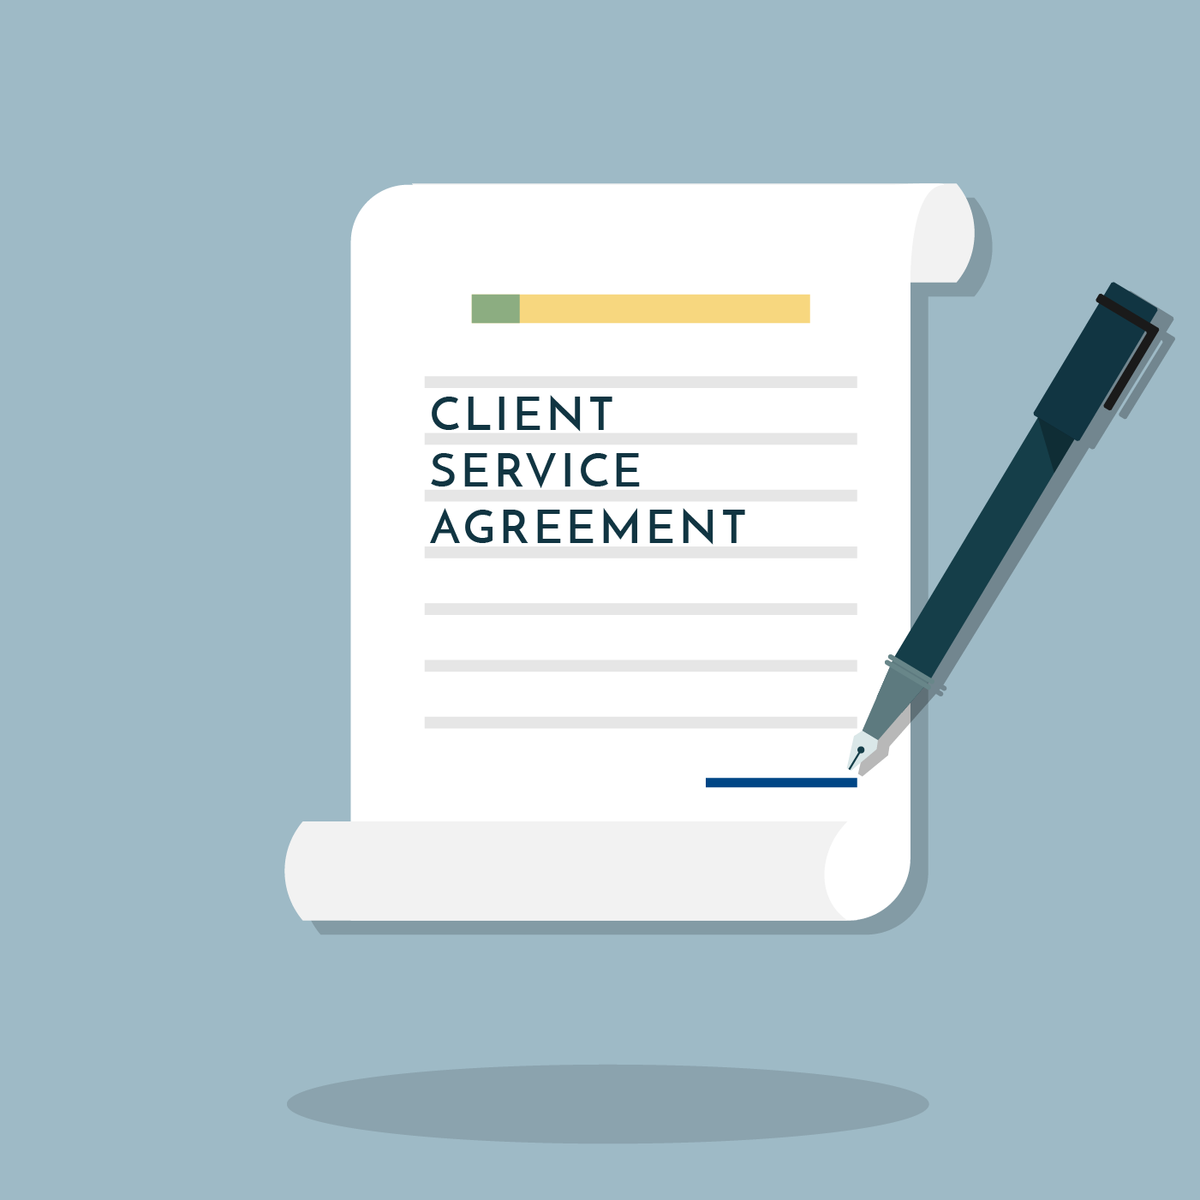 Client Service Agreement